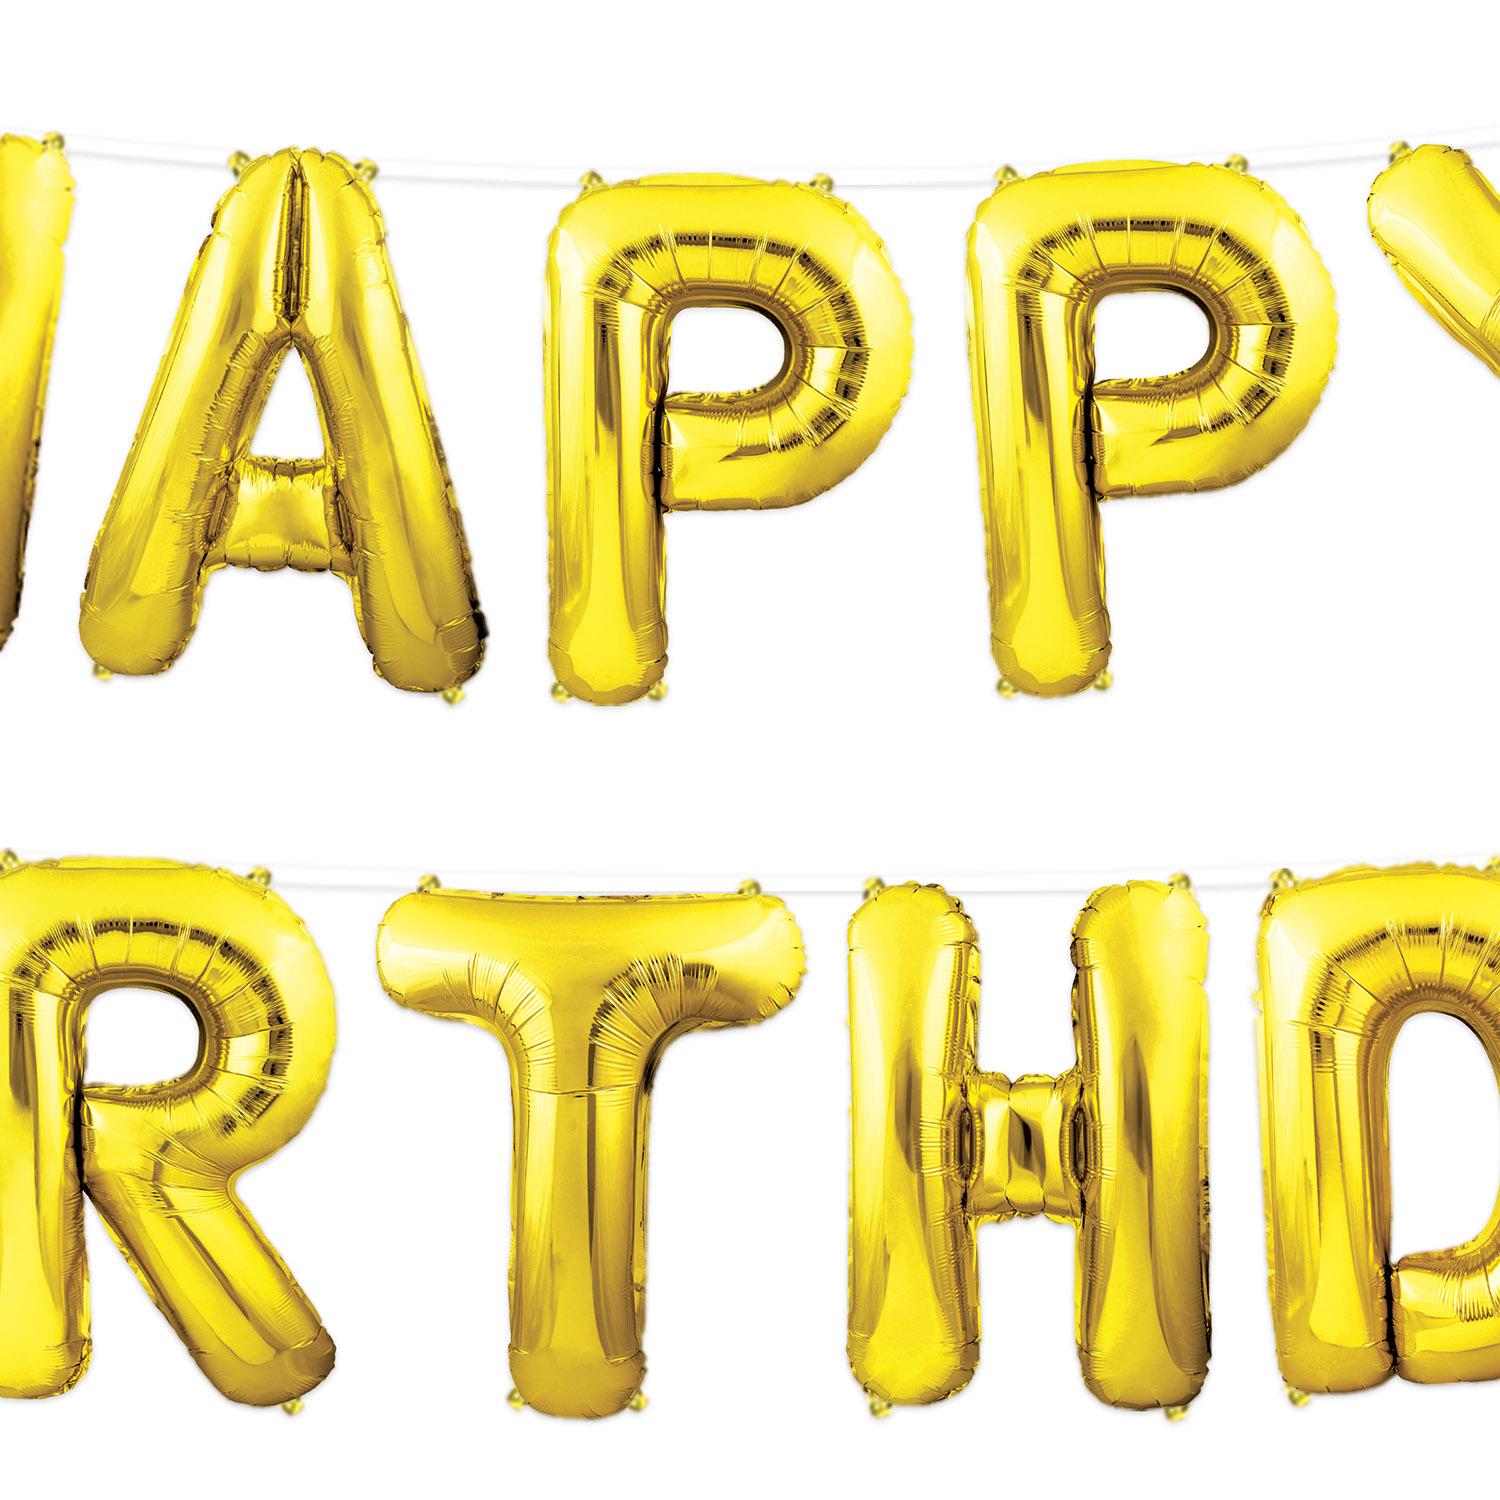 Beistle Happy Birthday Party Balloon Streamer - Gold